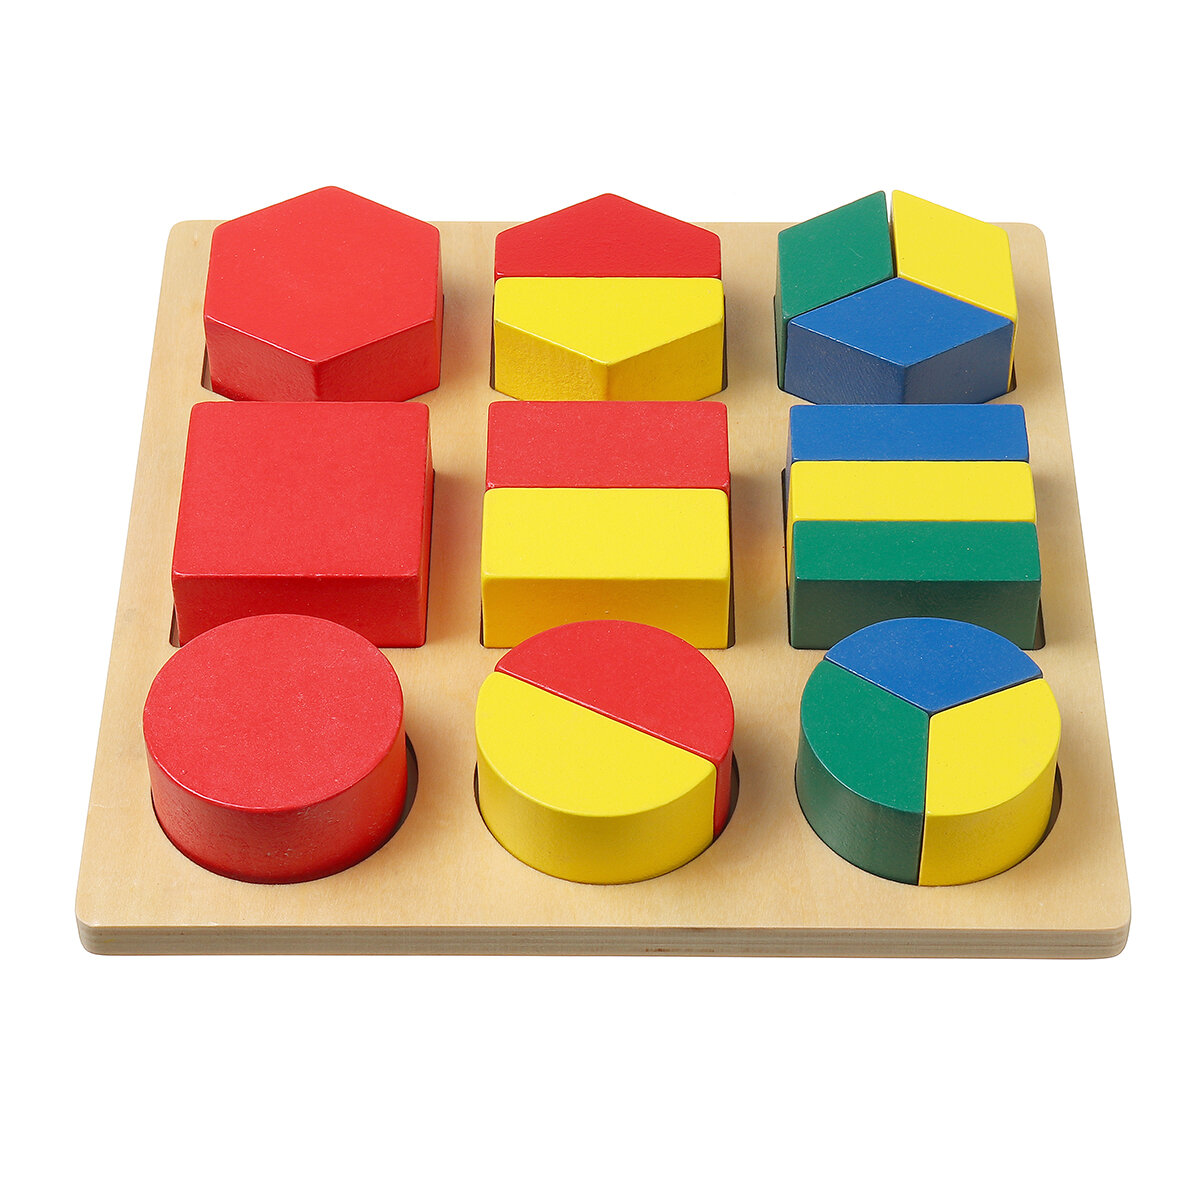 Wooden Geometric Blocks 3D Geometric Shapes Puzzle Kids Brain Development Early Educational Toys for